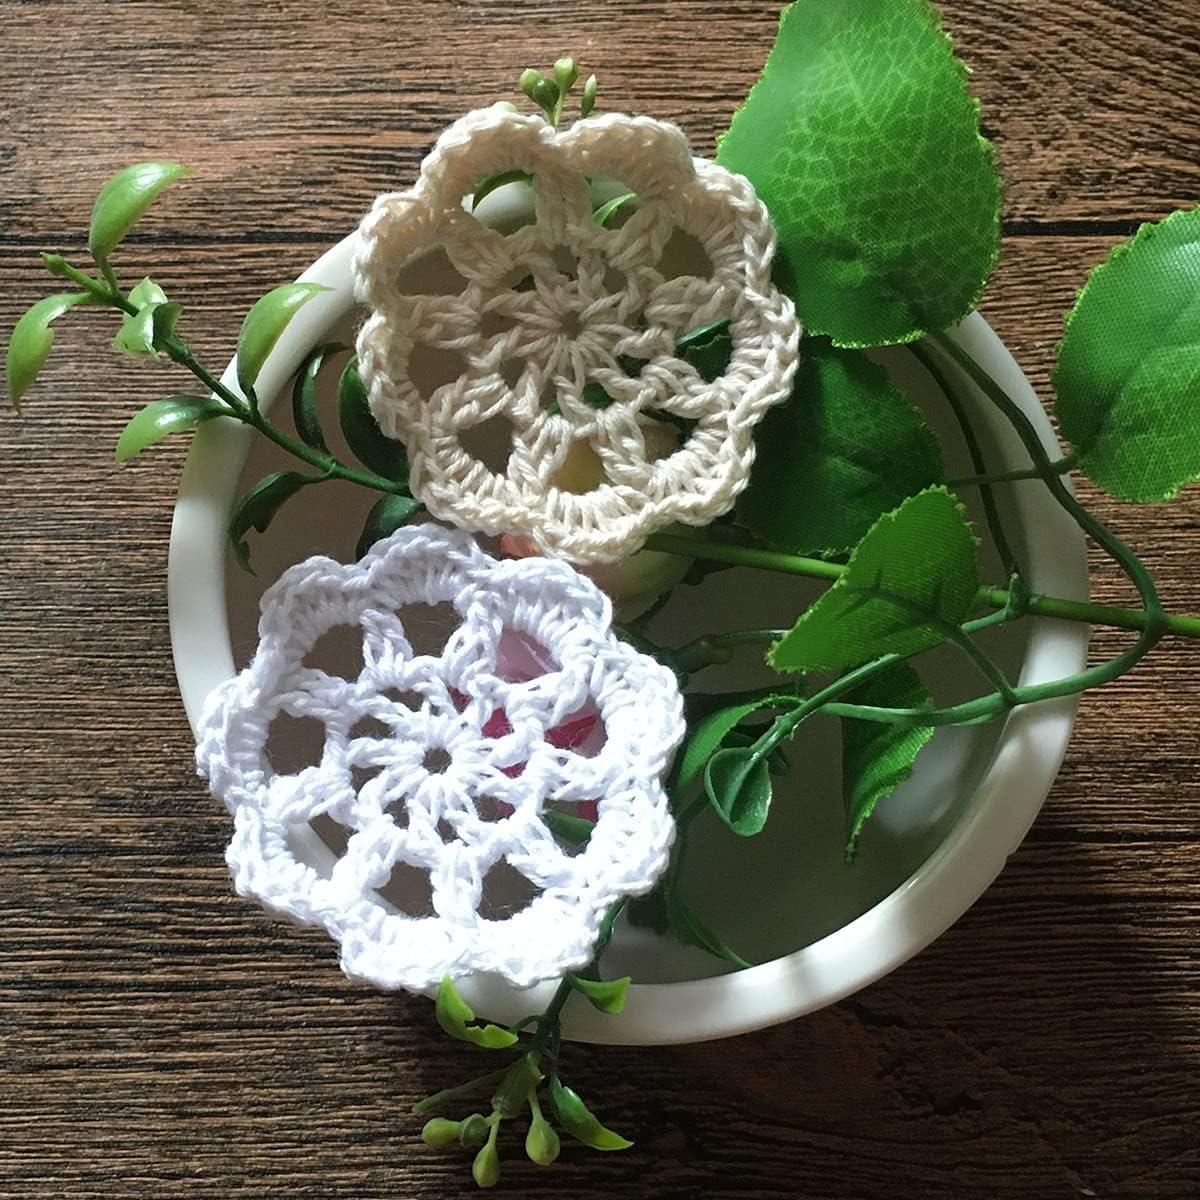 MINDPLUS Set of 24 Hand Crochet Doilies Cotton Crocheted Lace Doilies 2-7  Inches Round White Vintage (24pcs White)